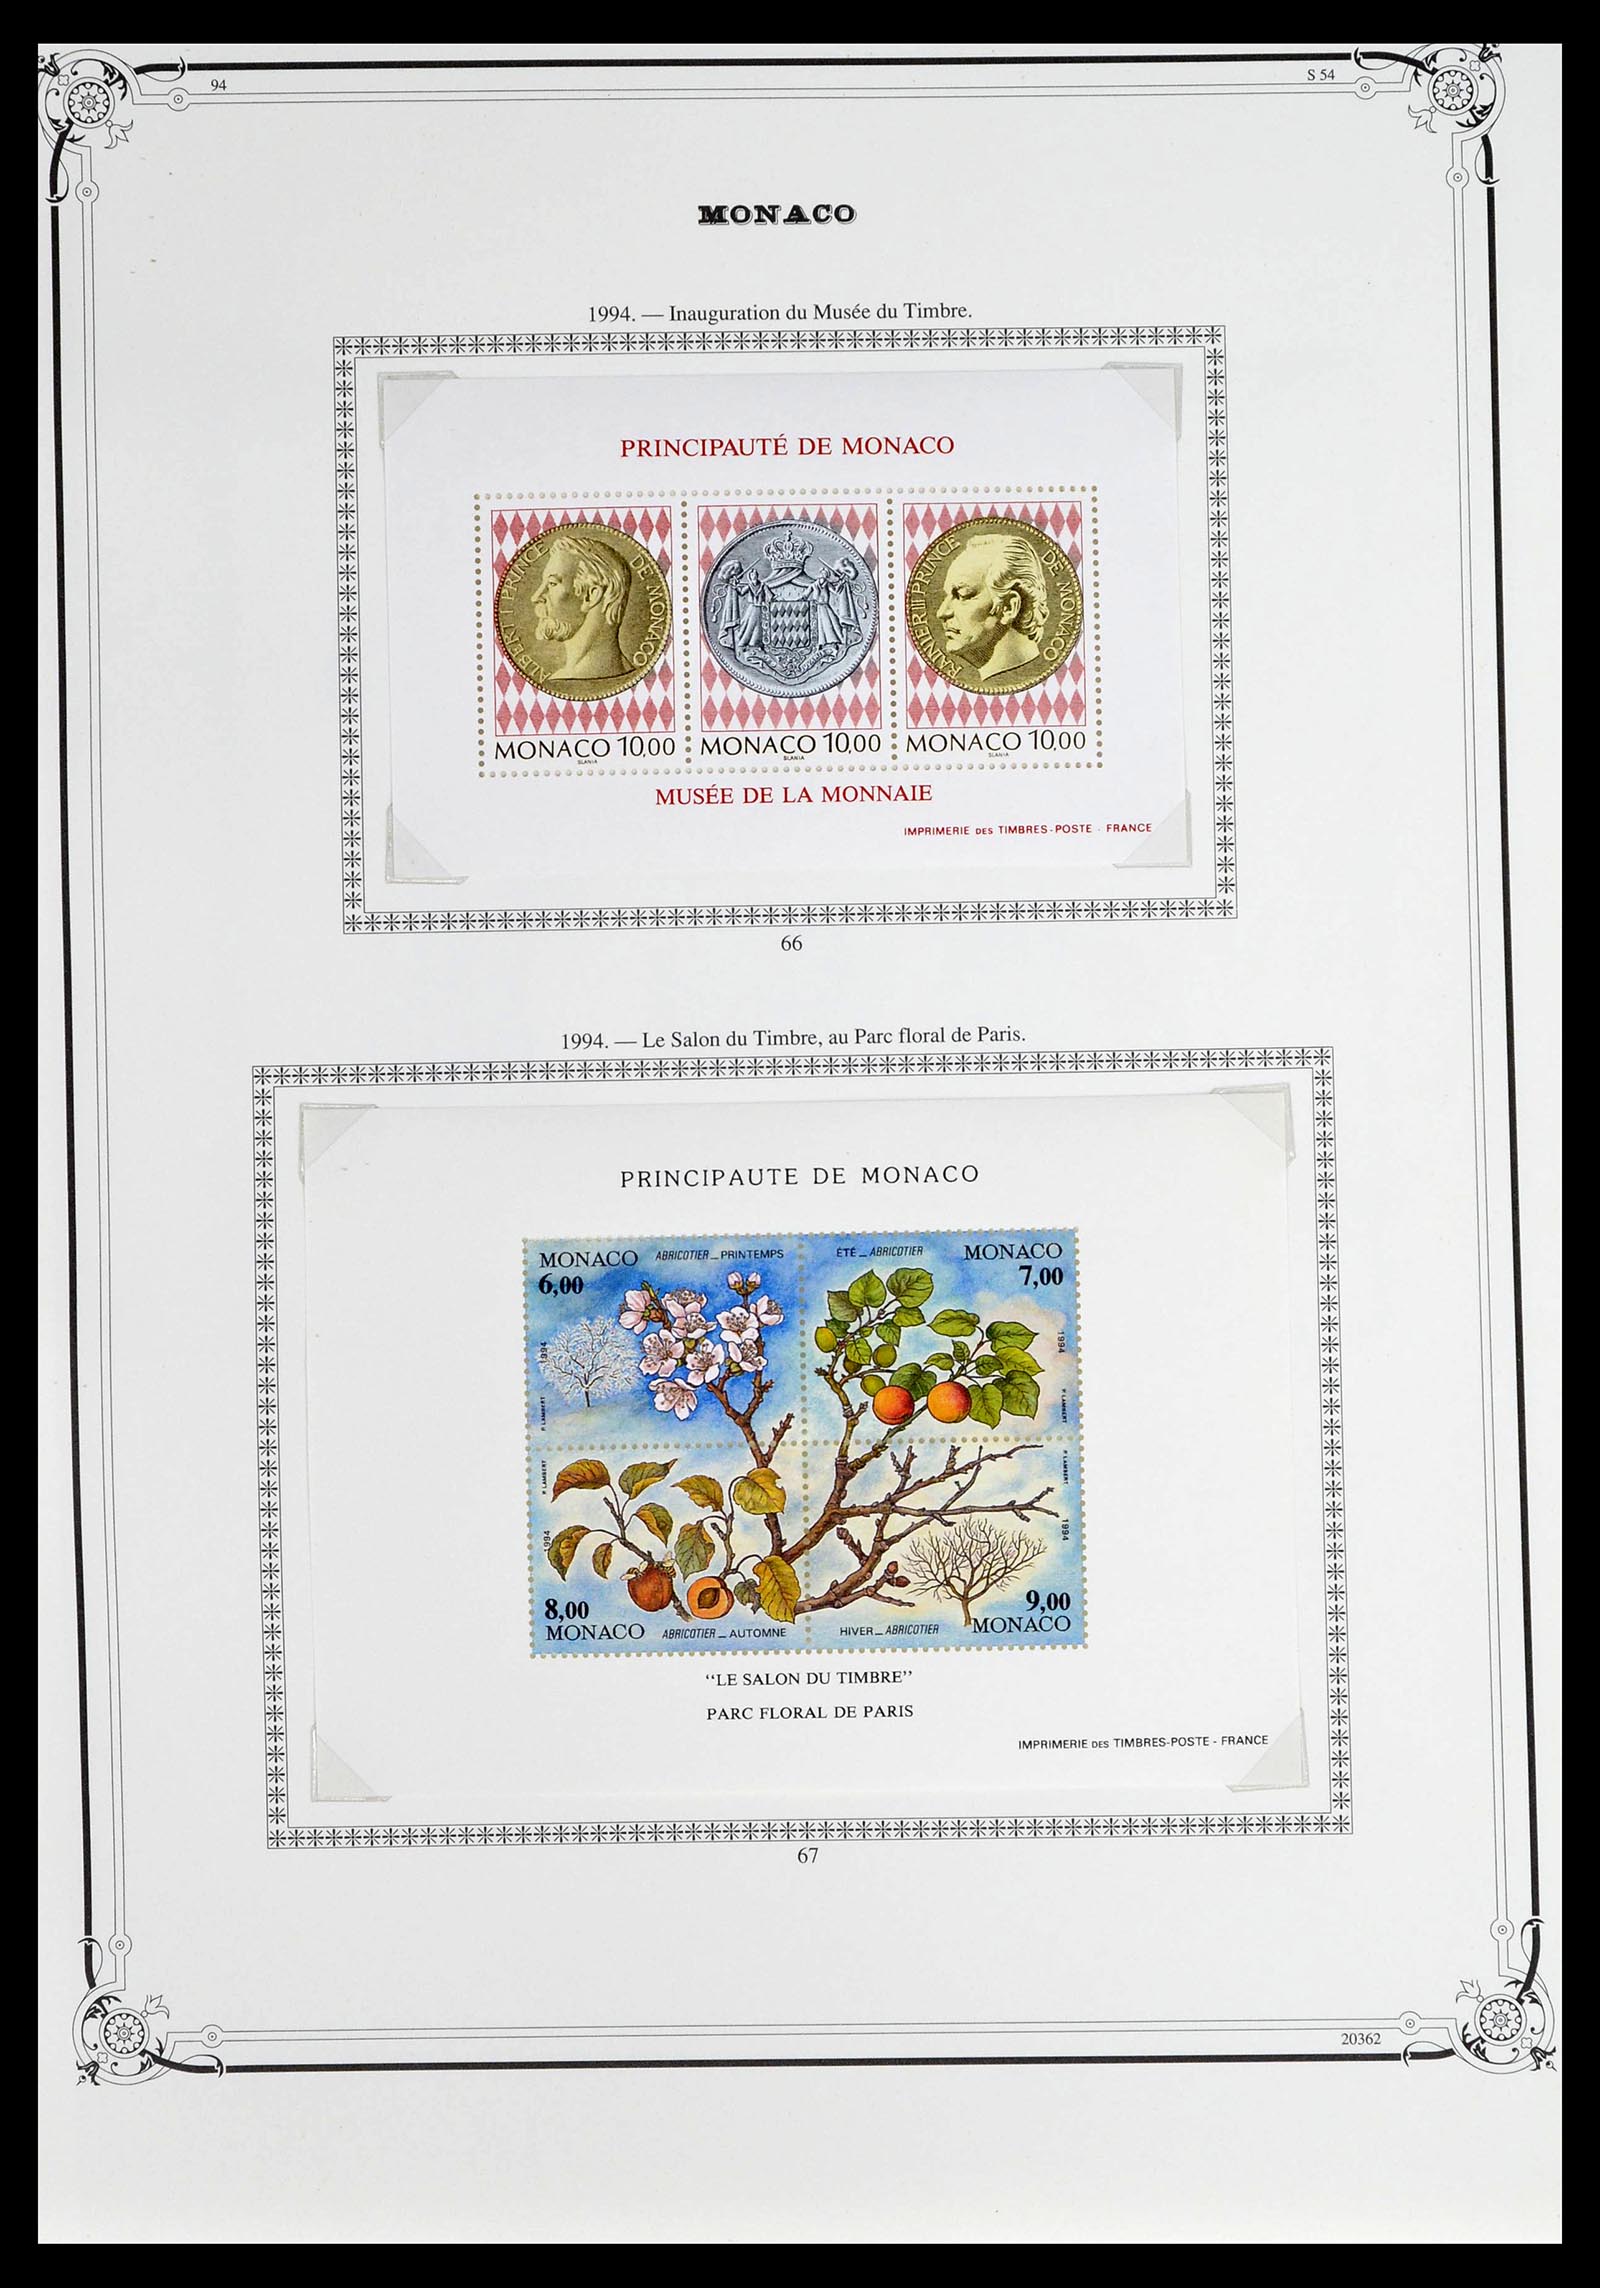 39133 0243 - Stamp collection 39133 Monaco 1885-1996.